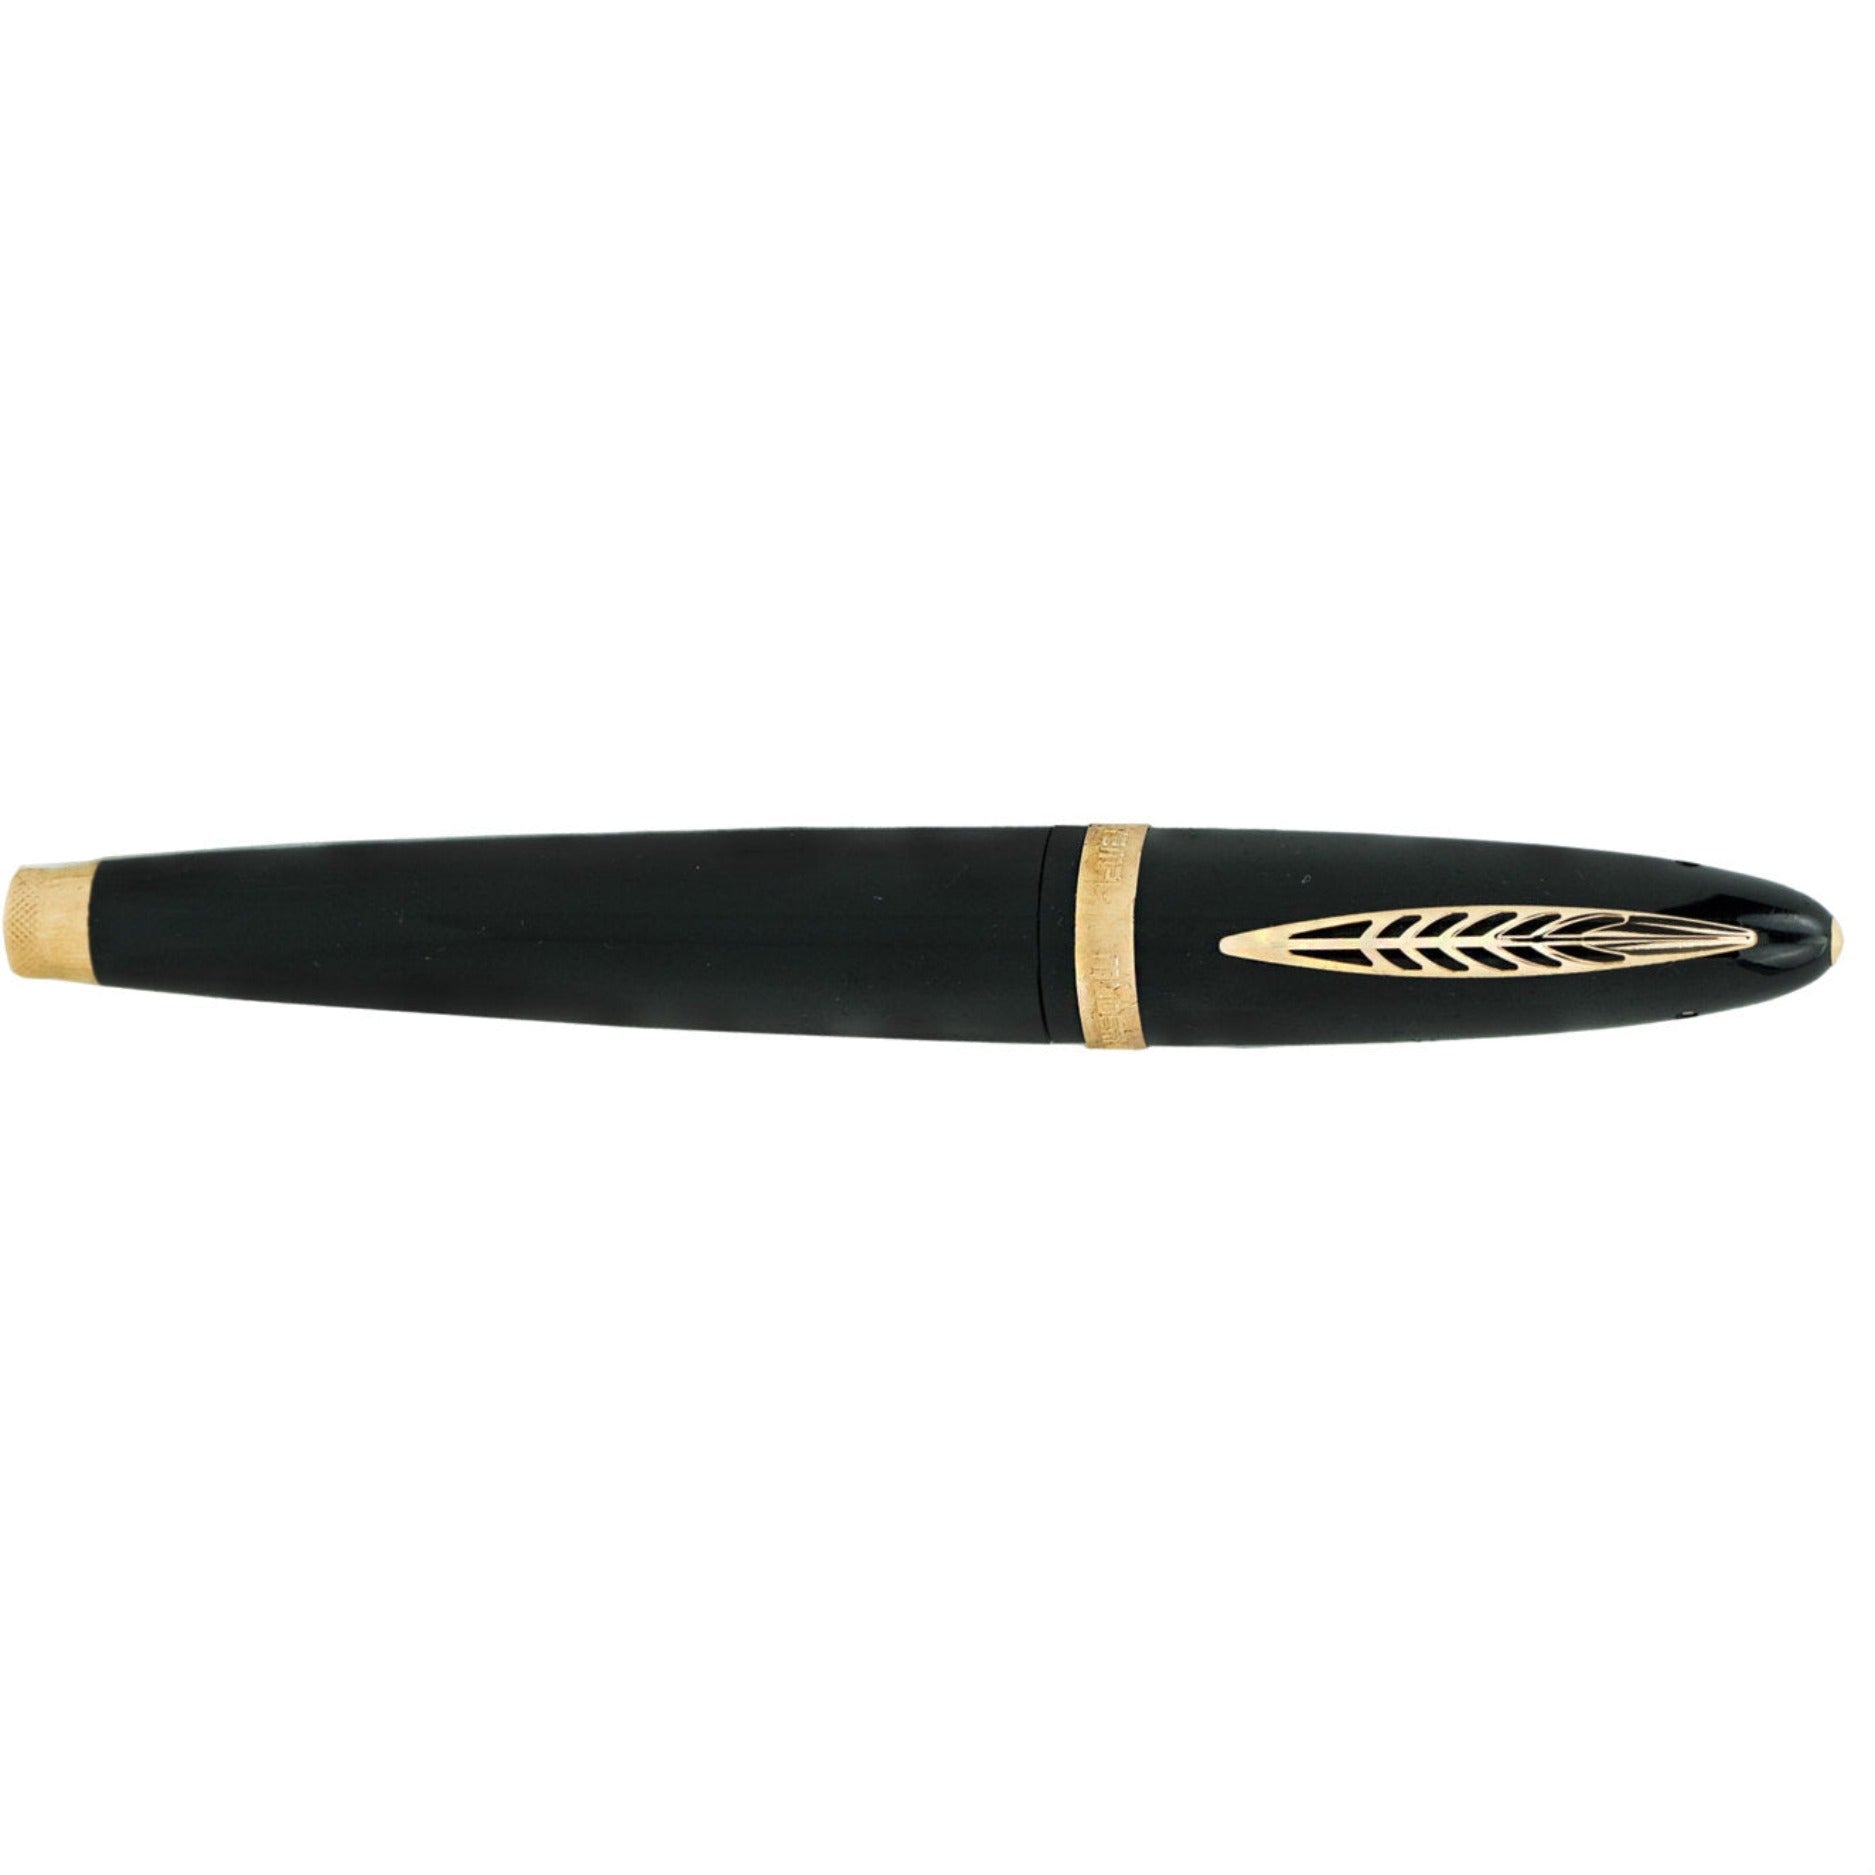 Pineider Modern Times Rollerball Pen - Black - Rose Gold Trim-Pen Boutique Ltd